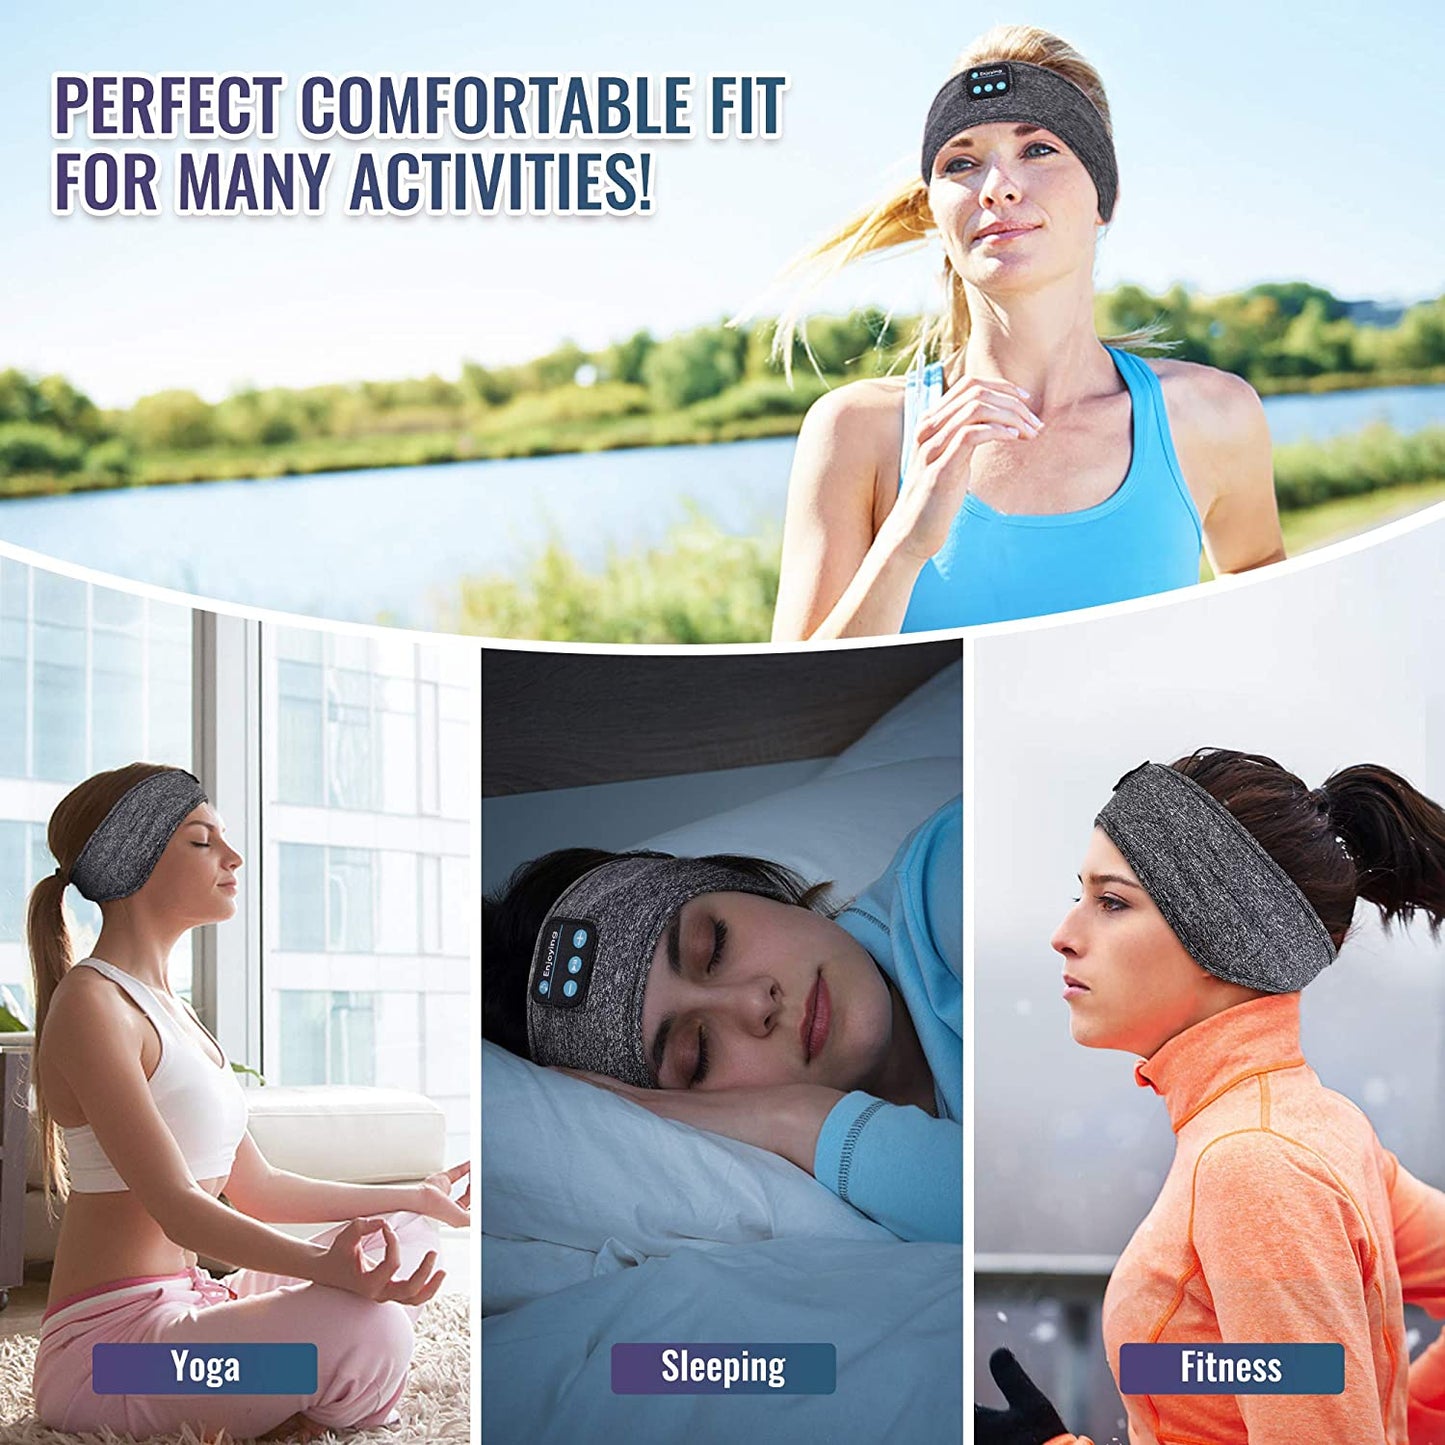 Bluetooth Sleep Headband: Thin & Wireless